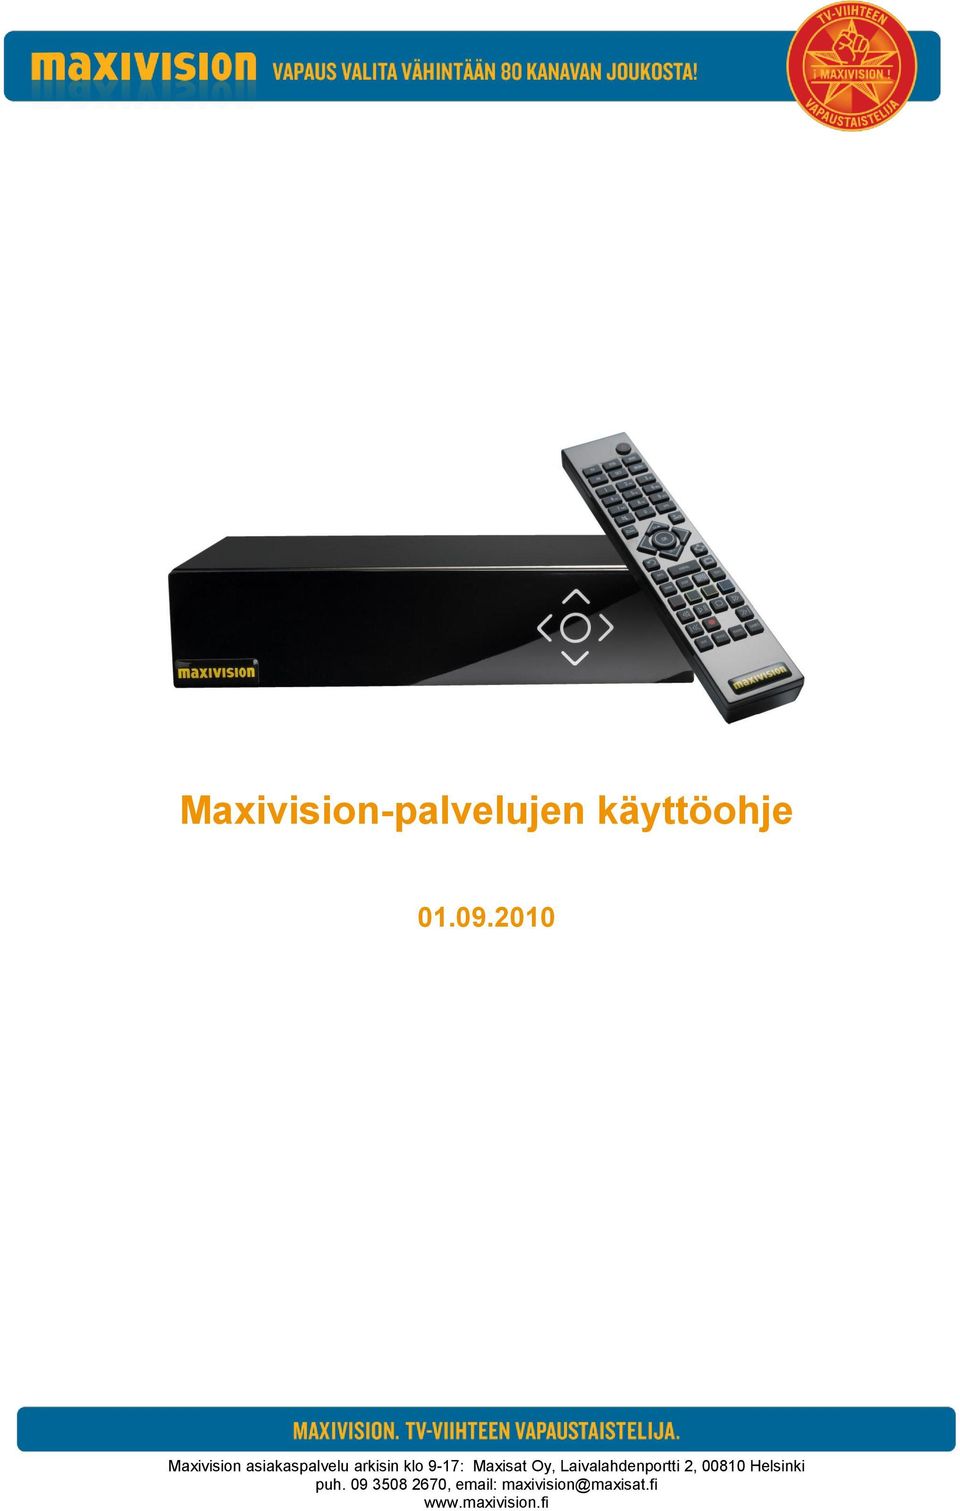 Maxisat Oy, Laivalahdenportti 2, 00810 Helsinki